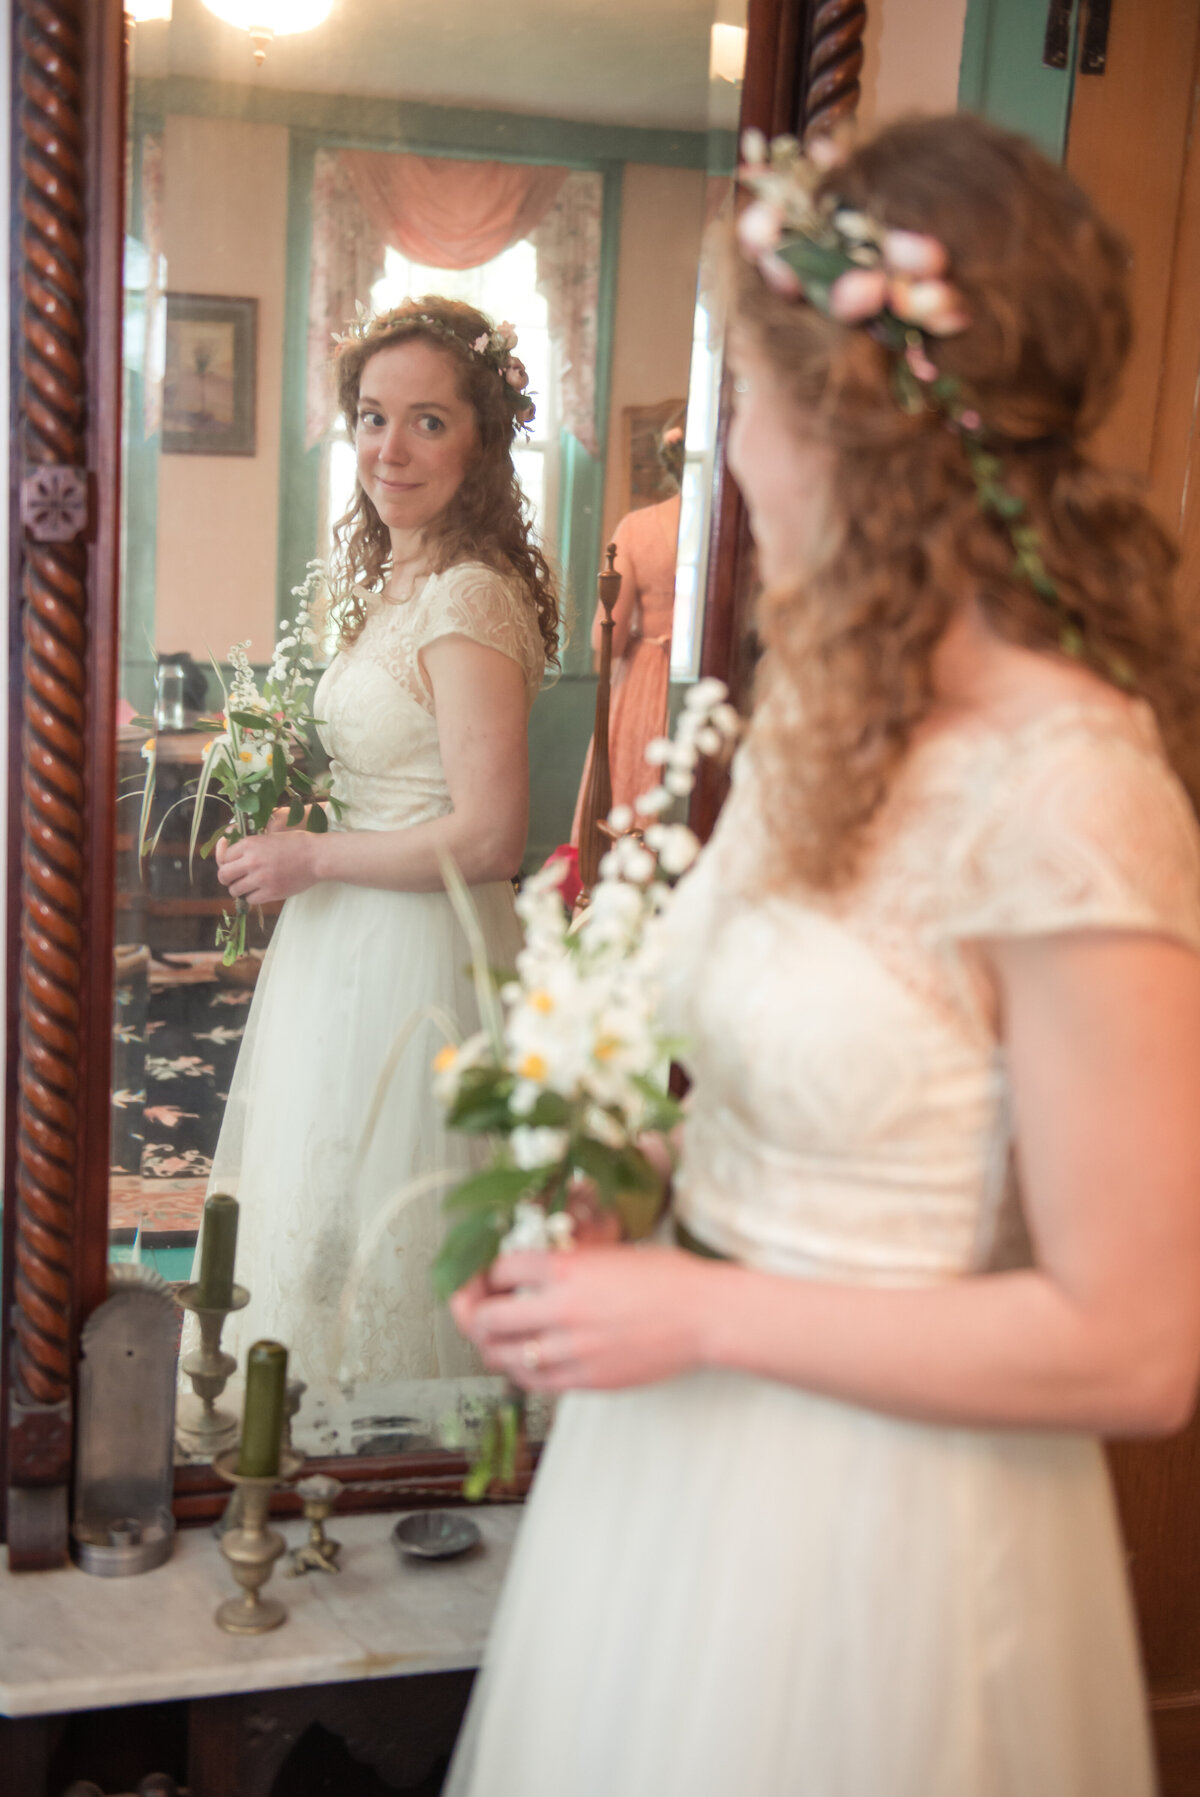 Bride looking in mirror on wedding day